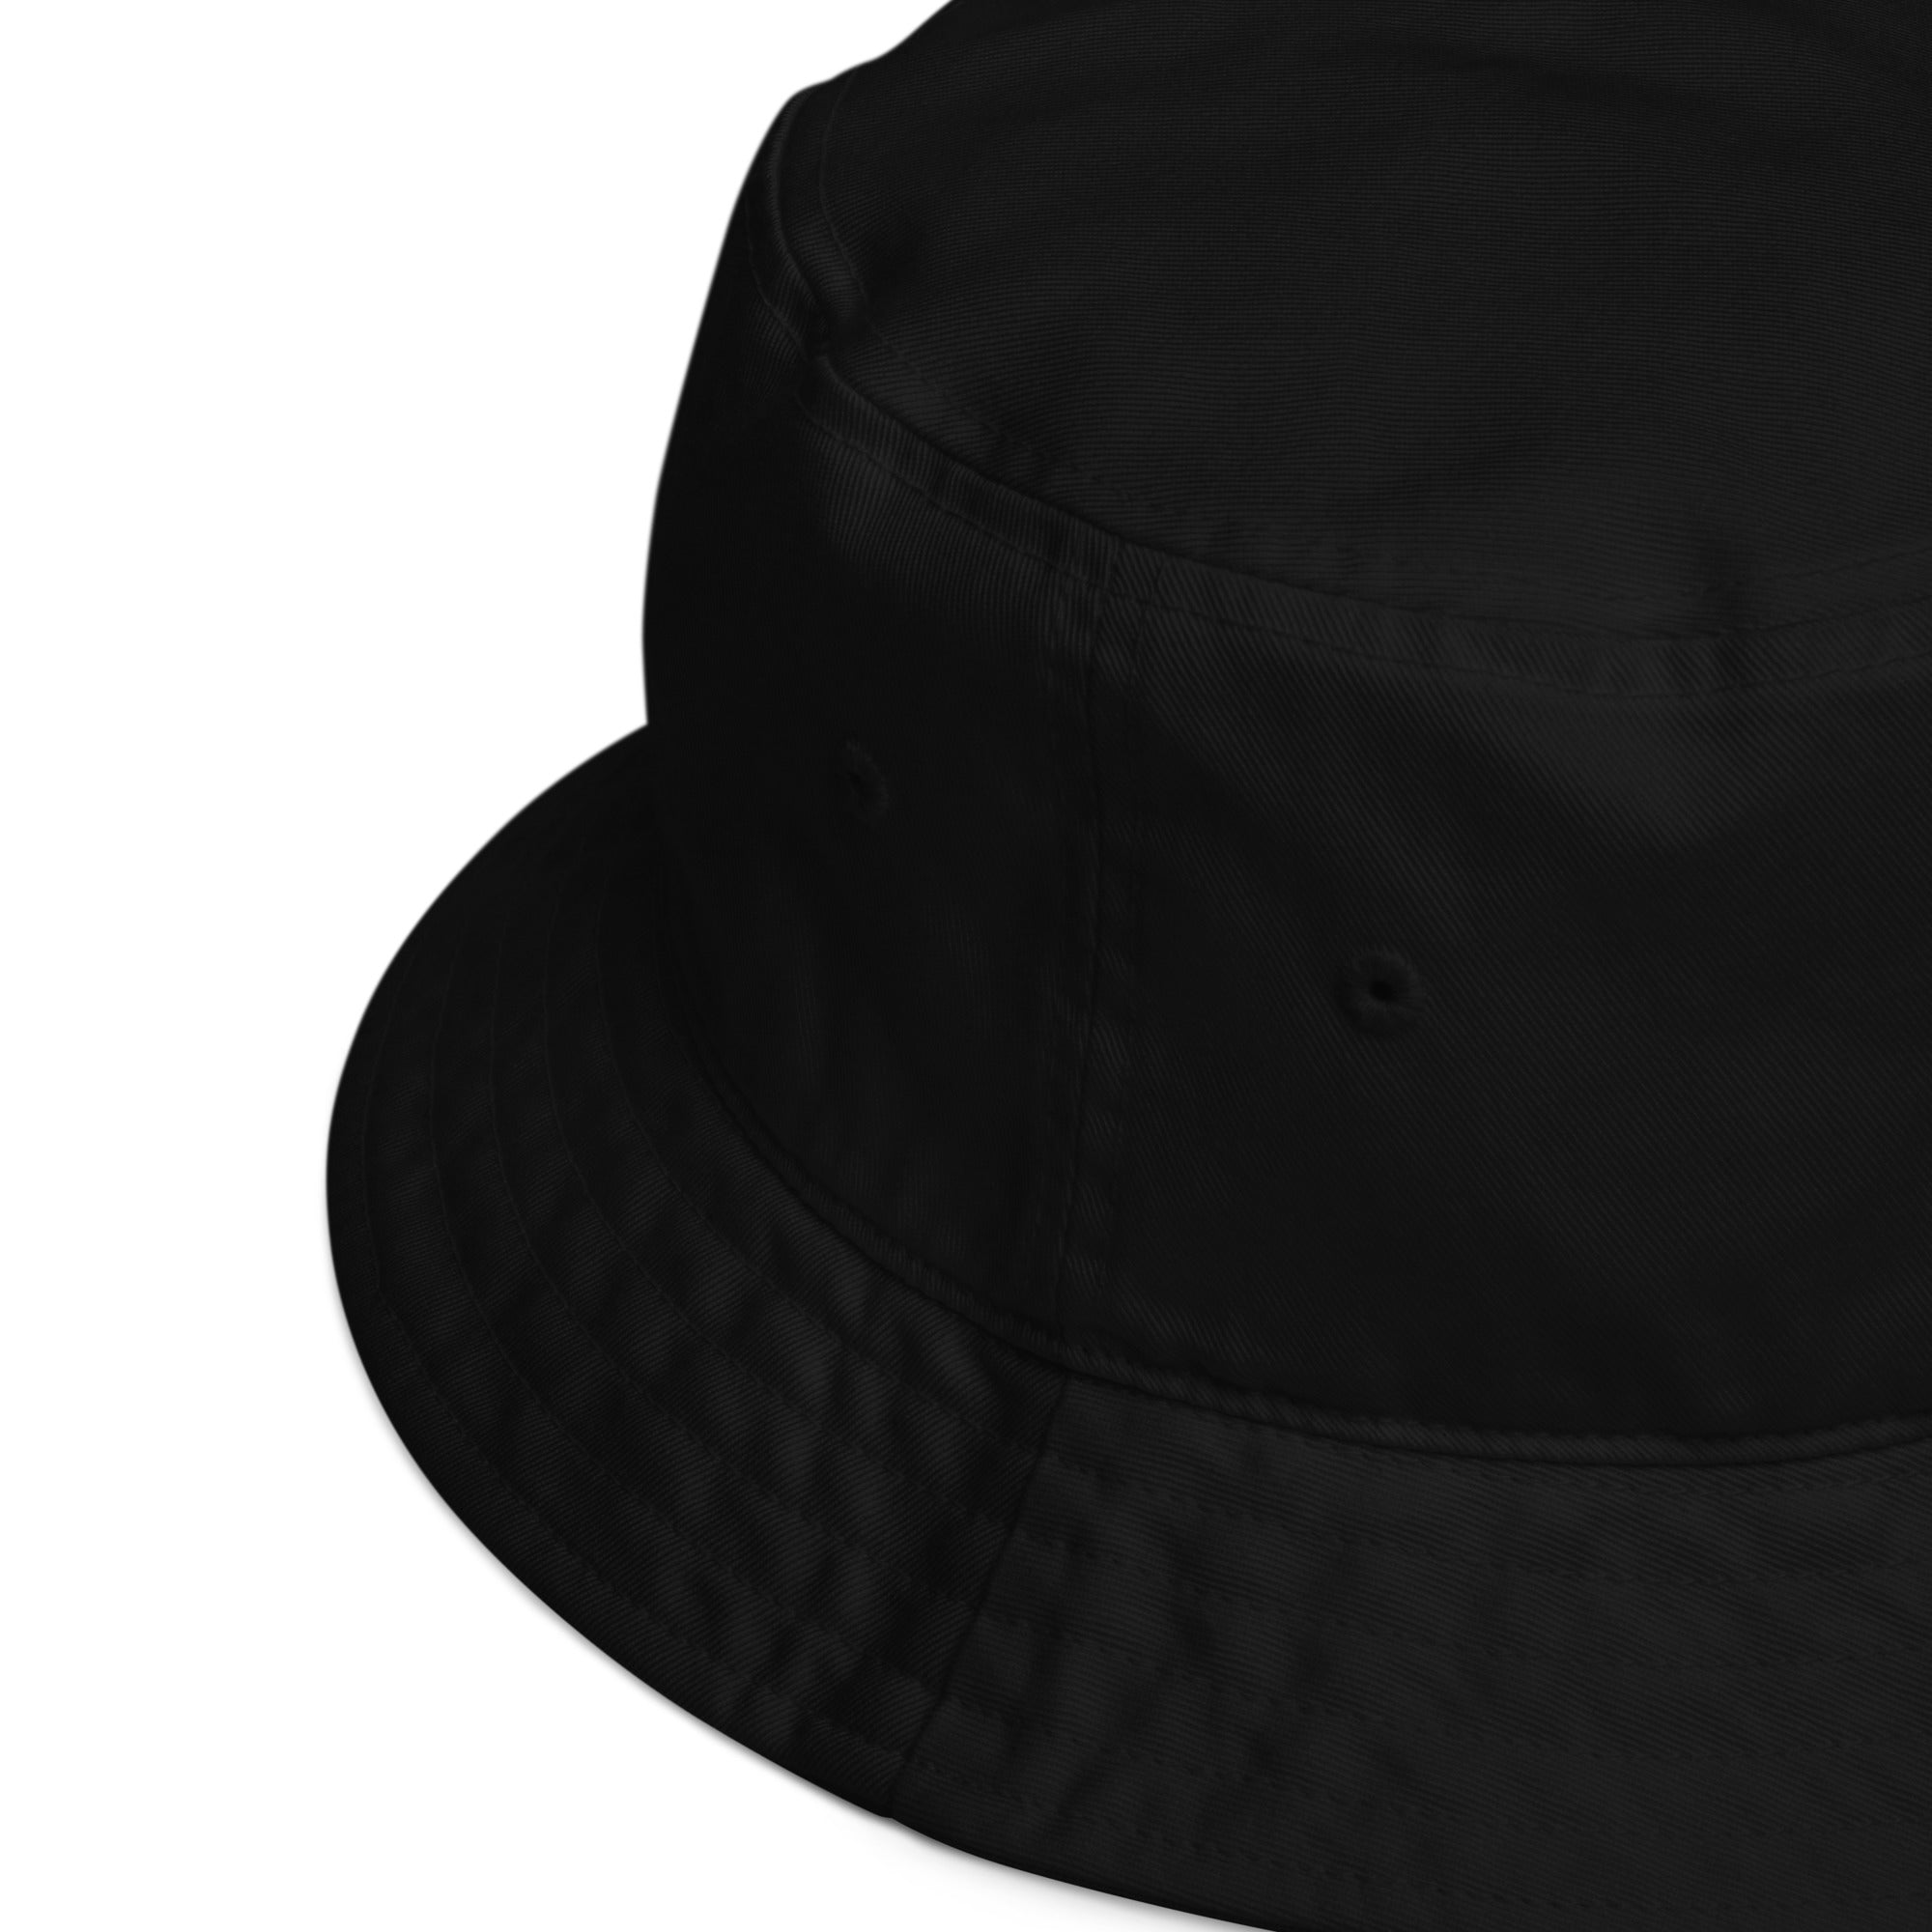 "SOUTHEAST / 202" (EMBLEM)  -Black Organic bucket hat